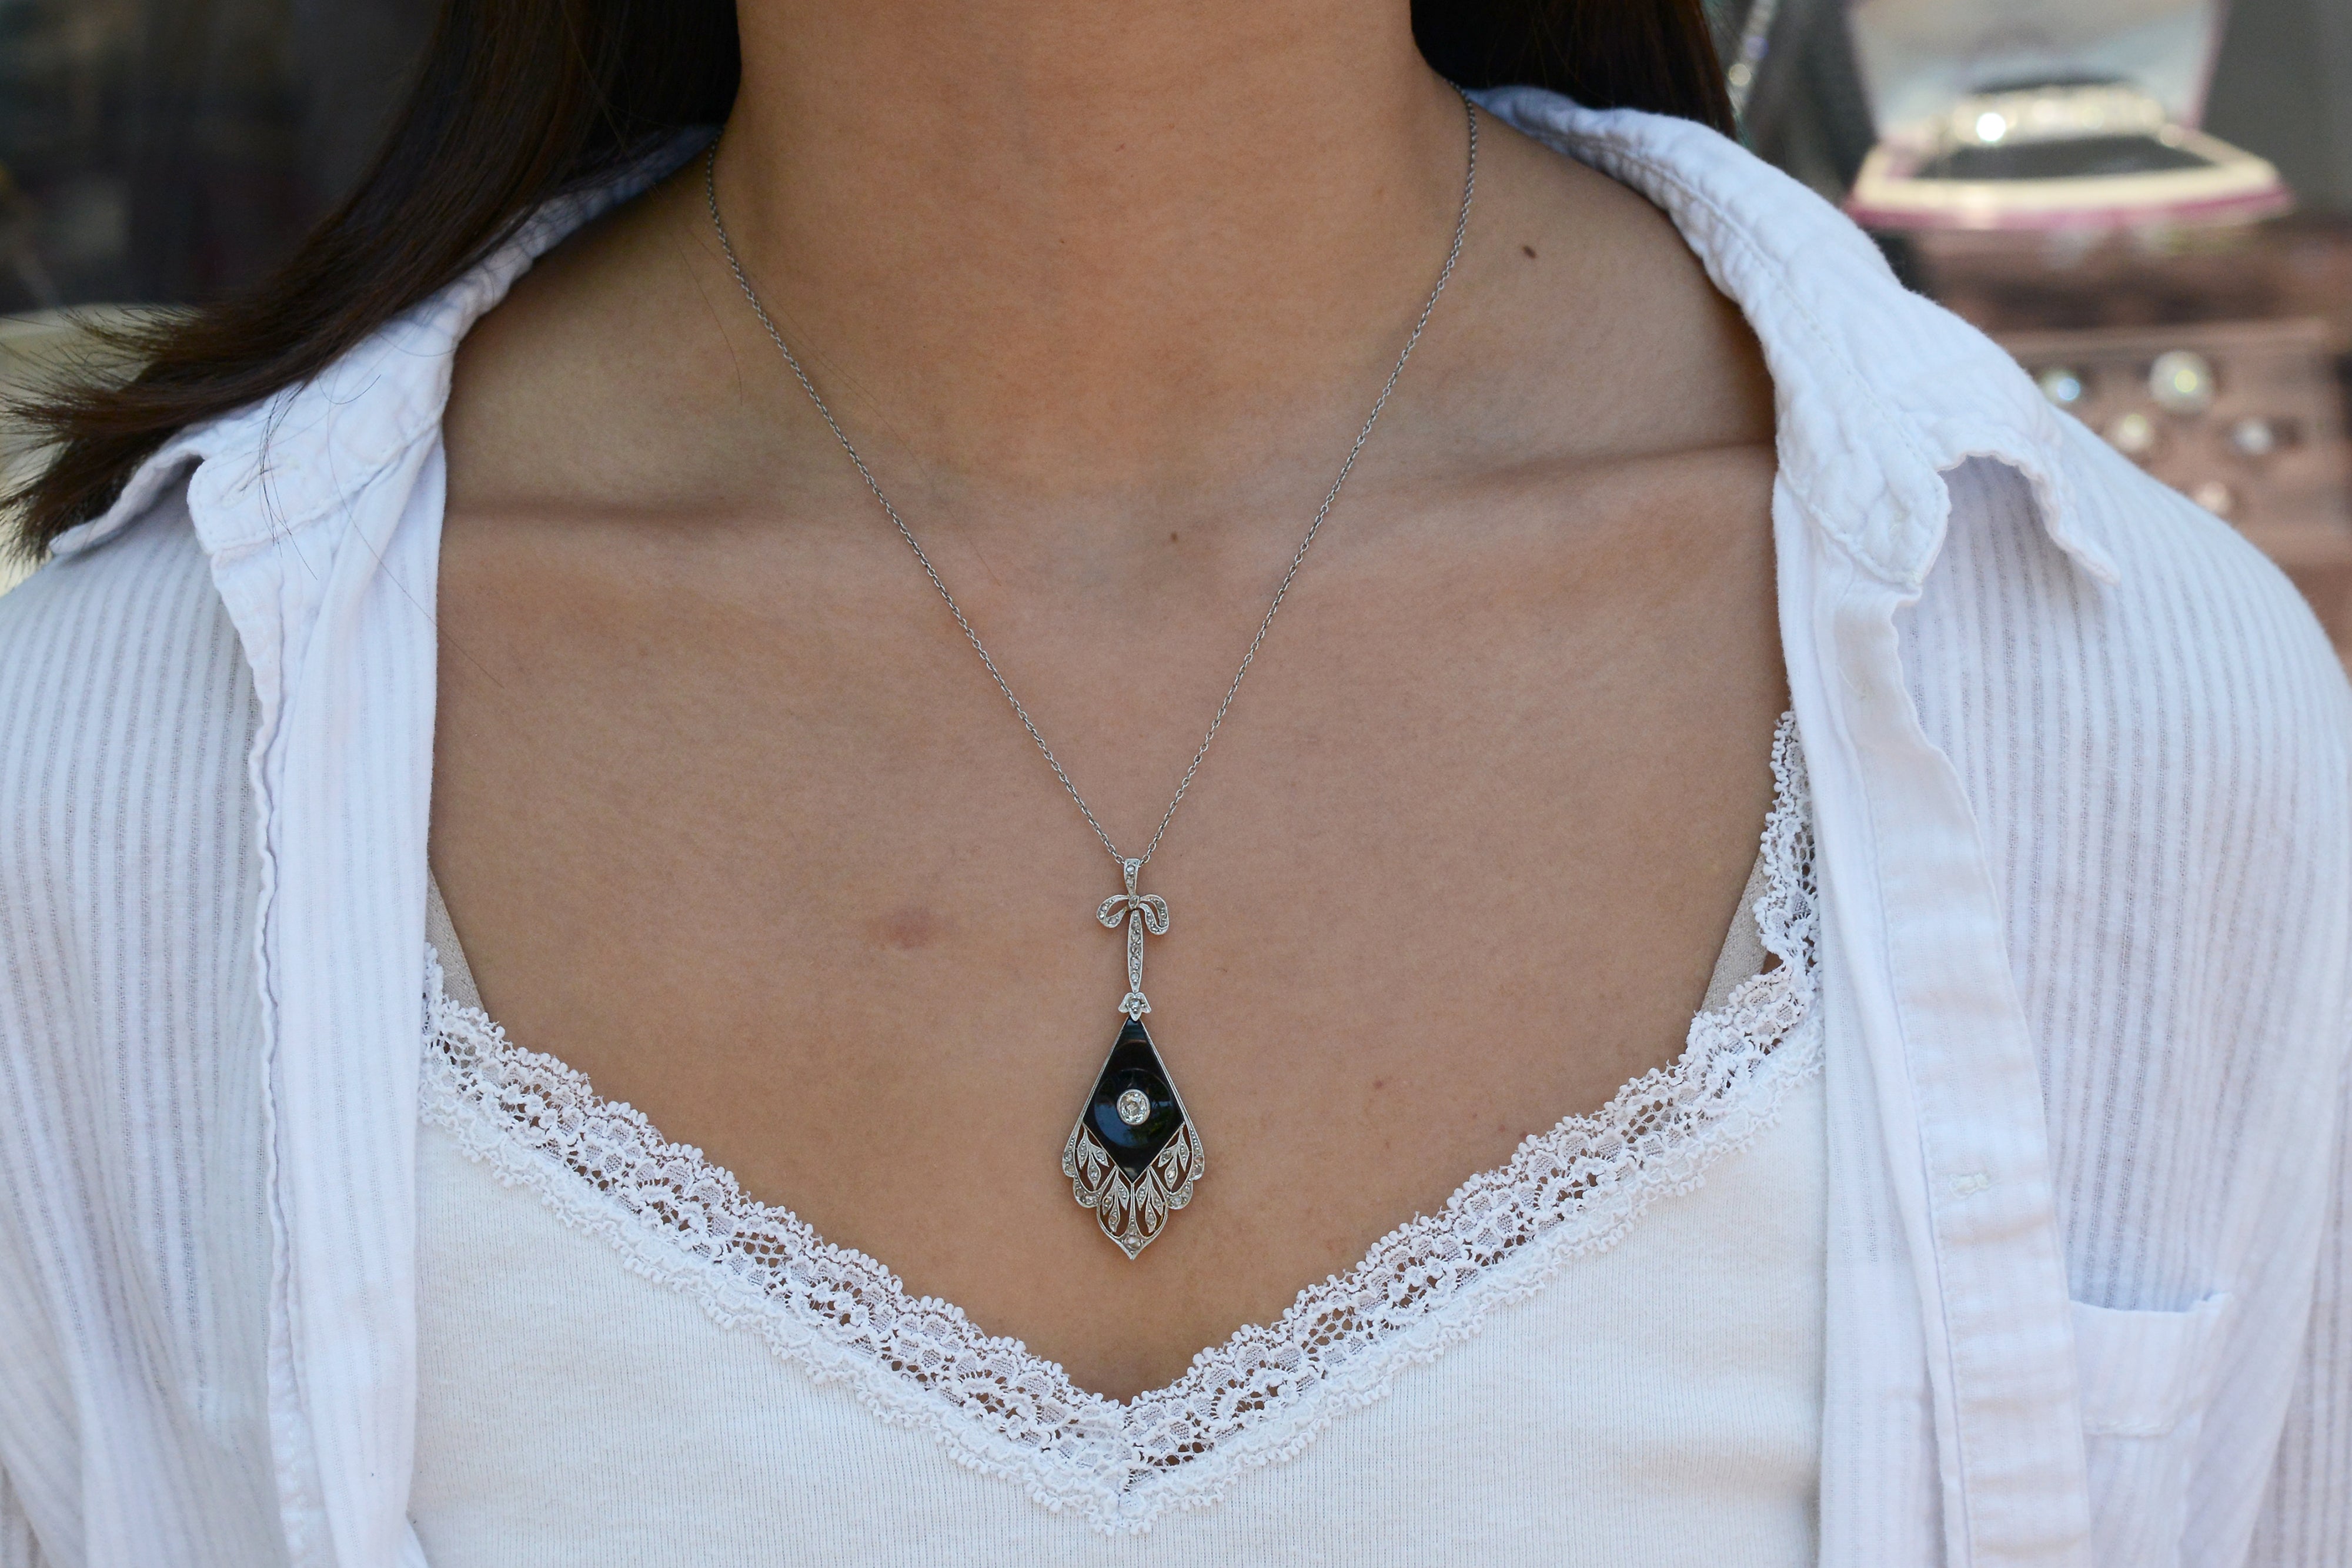 Antique Edwardian Black Onyx Diamond Bow Necklace